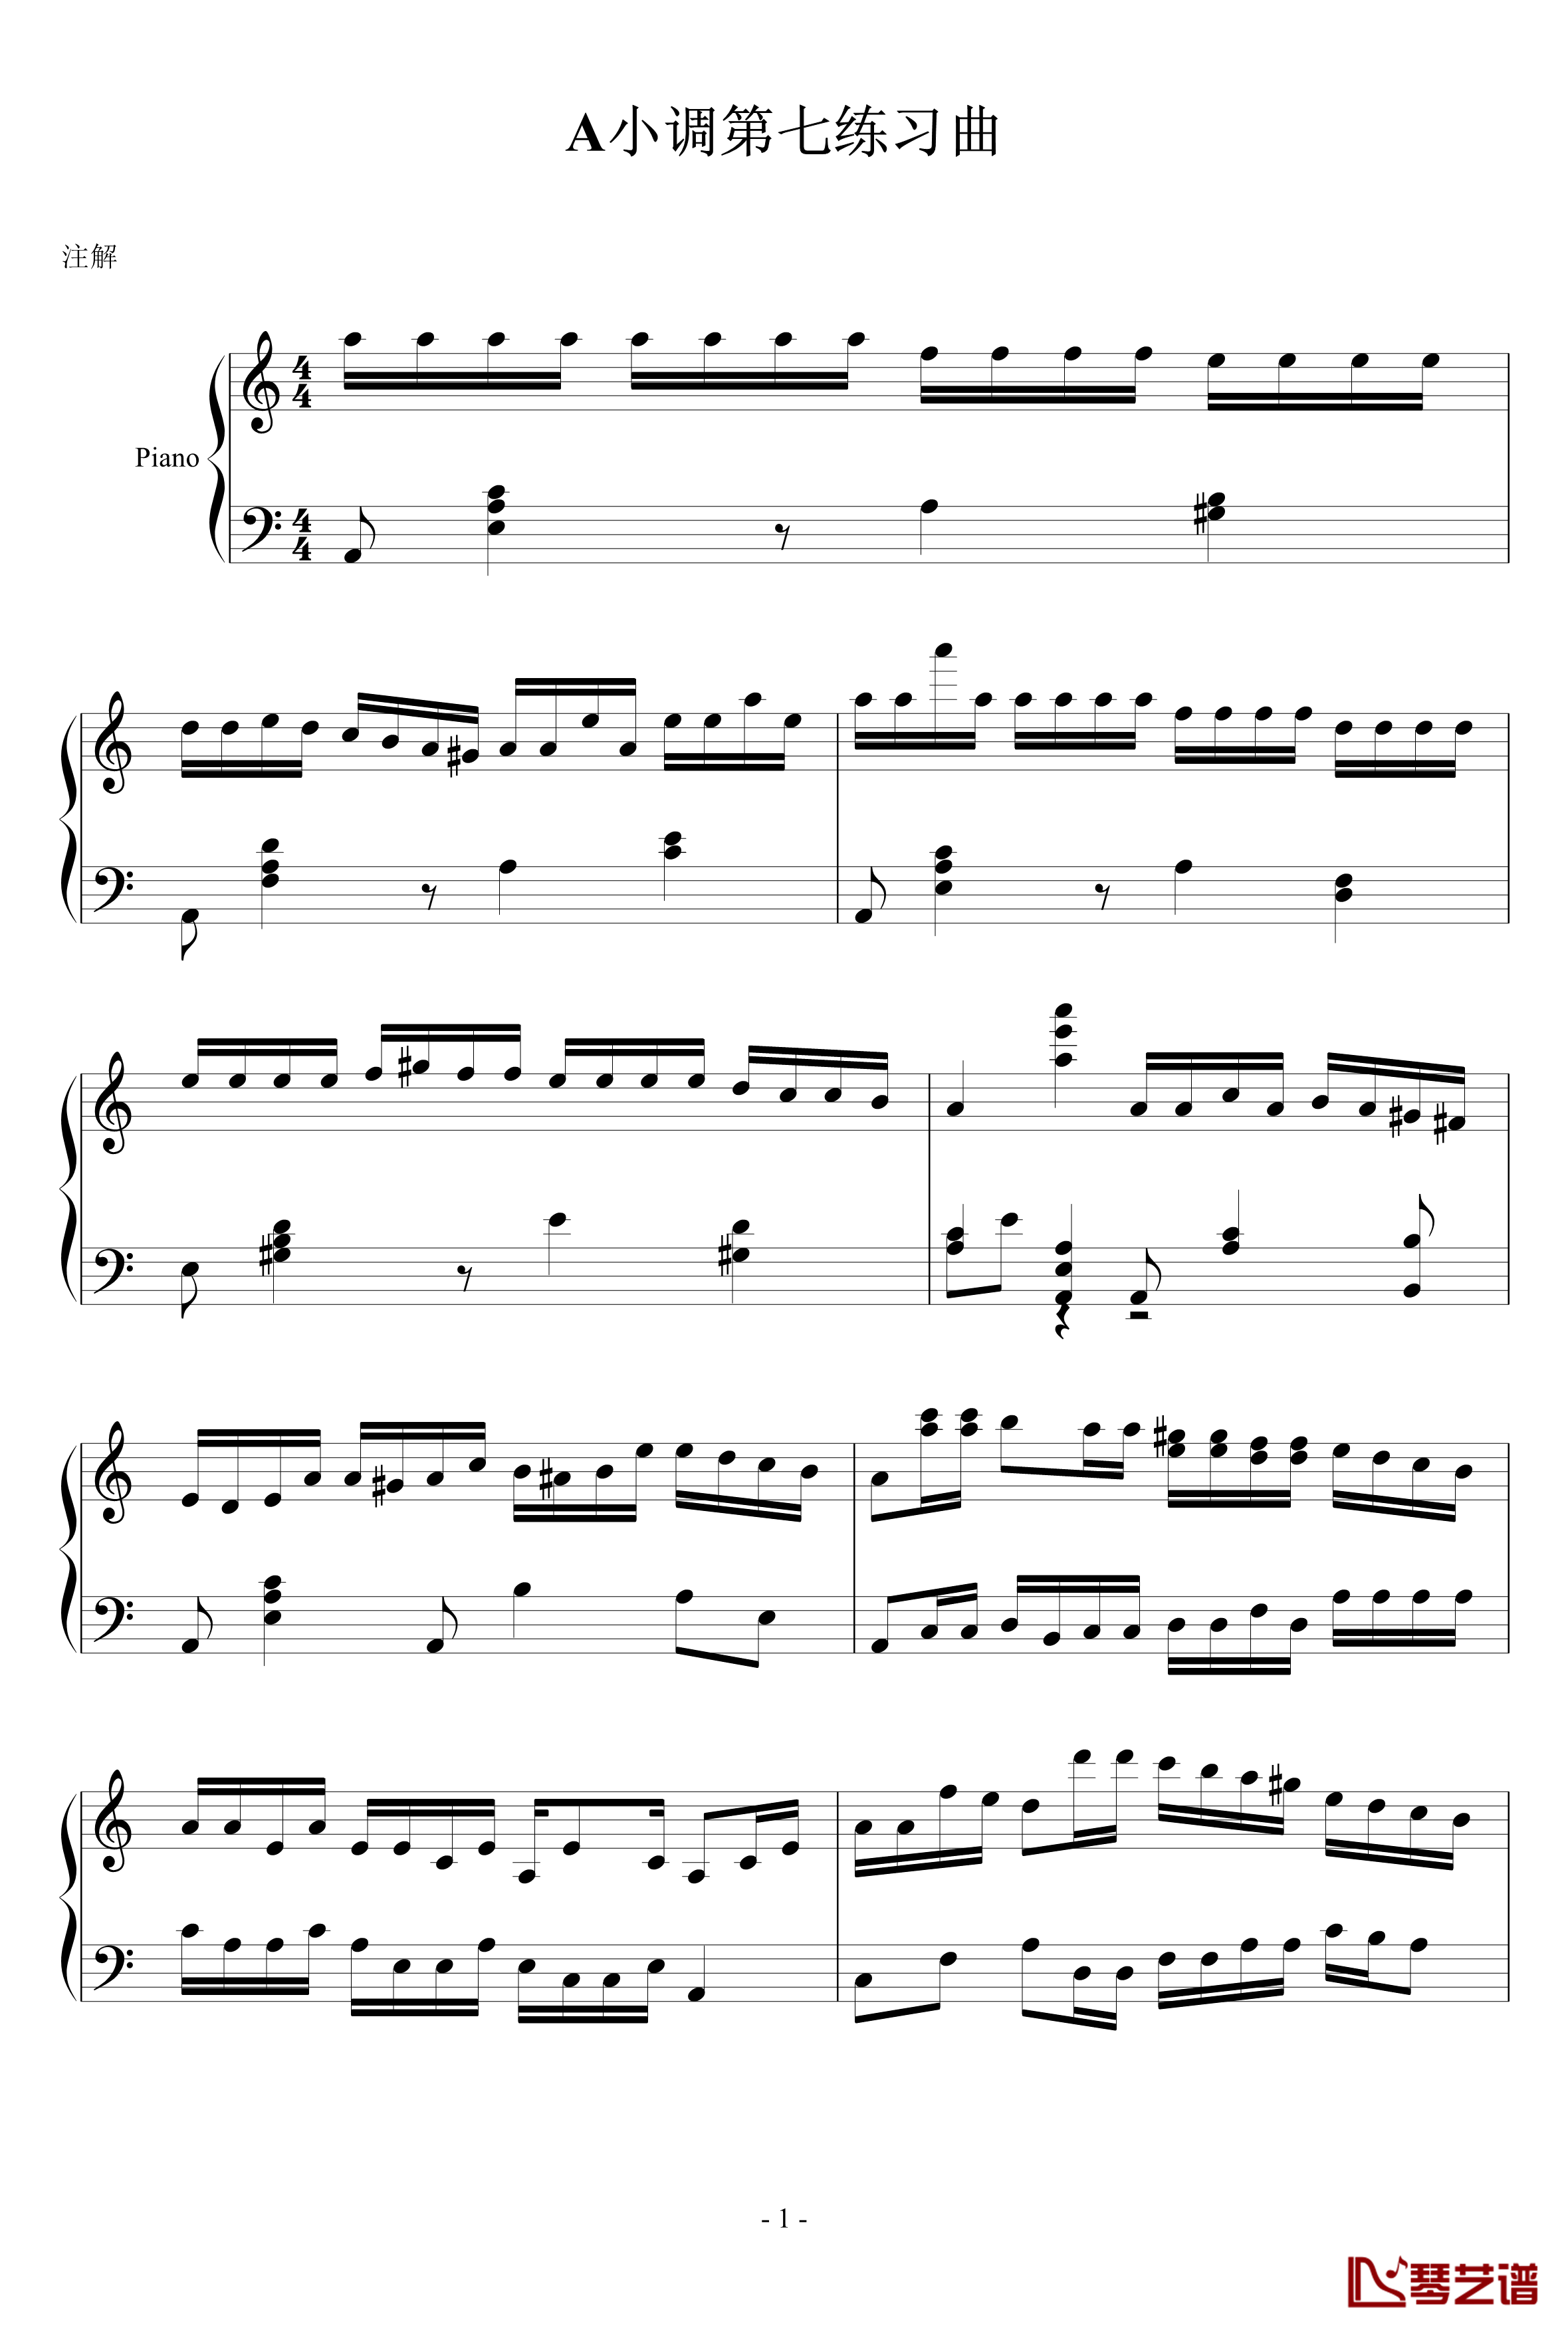 A小调第七练习曲钢琴谱-PARROT1861